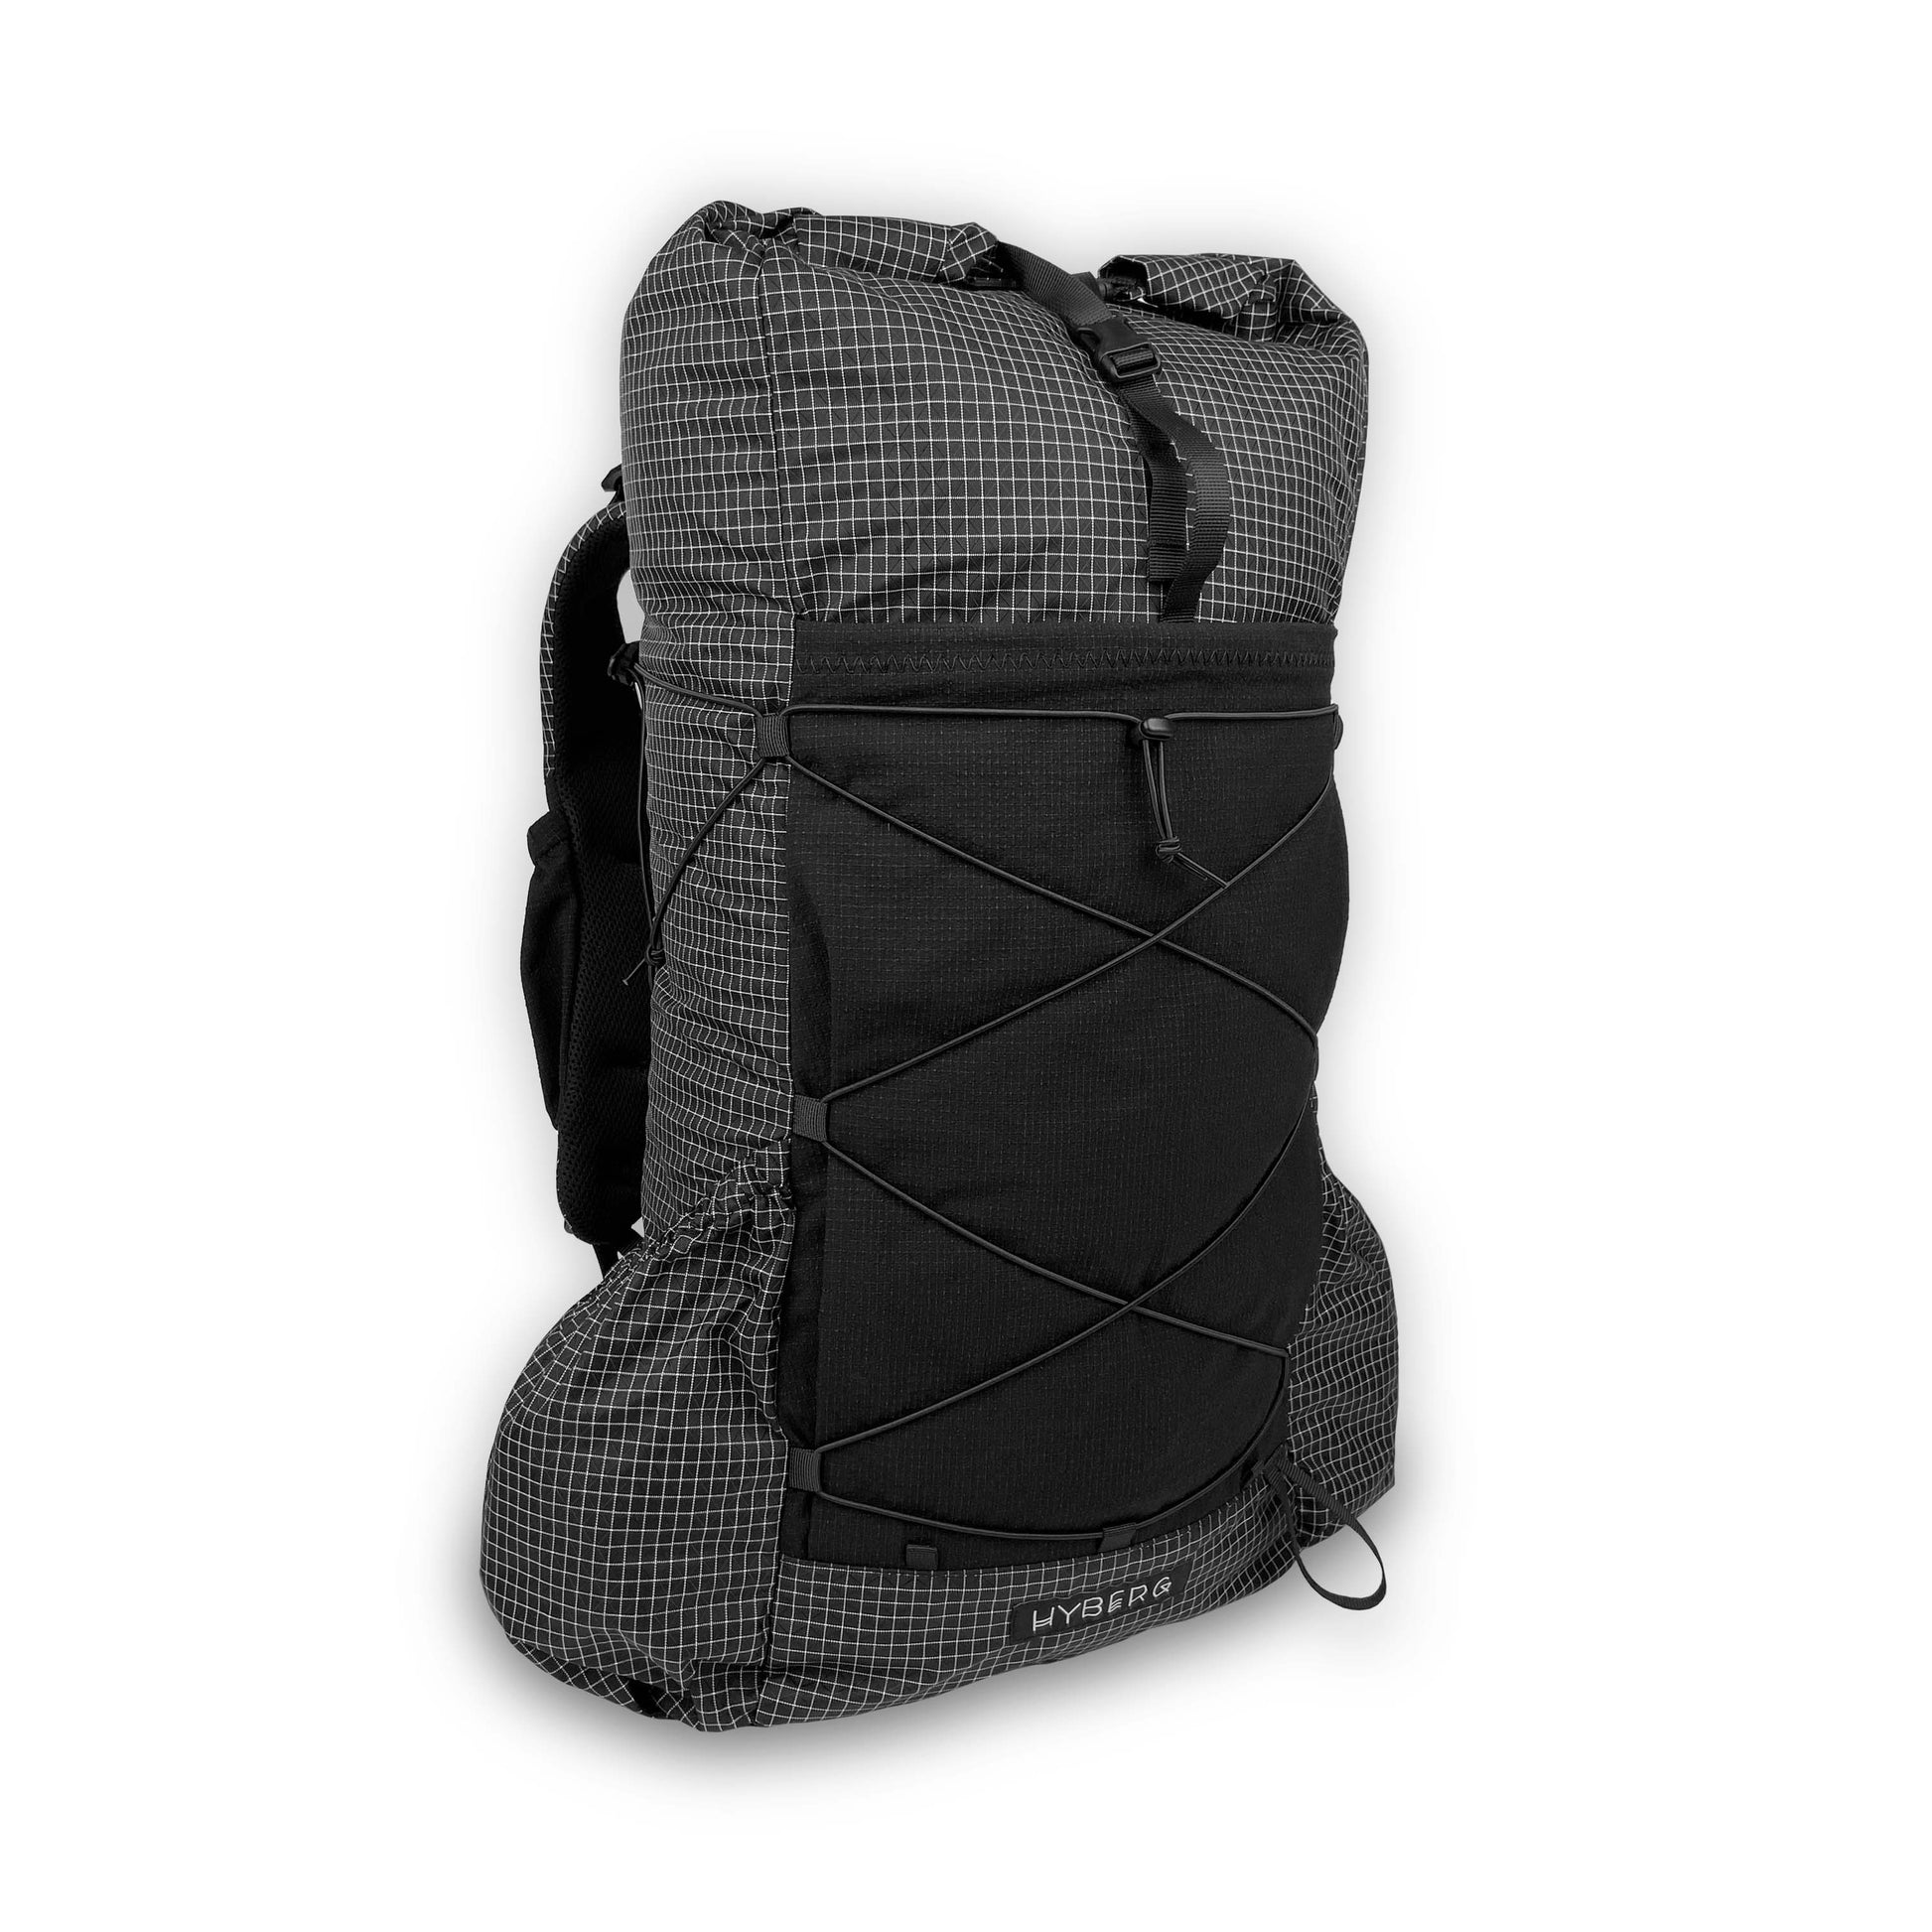 BANDIT RS Ultralight backpack